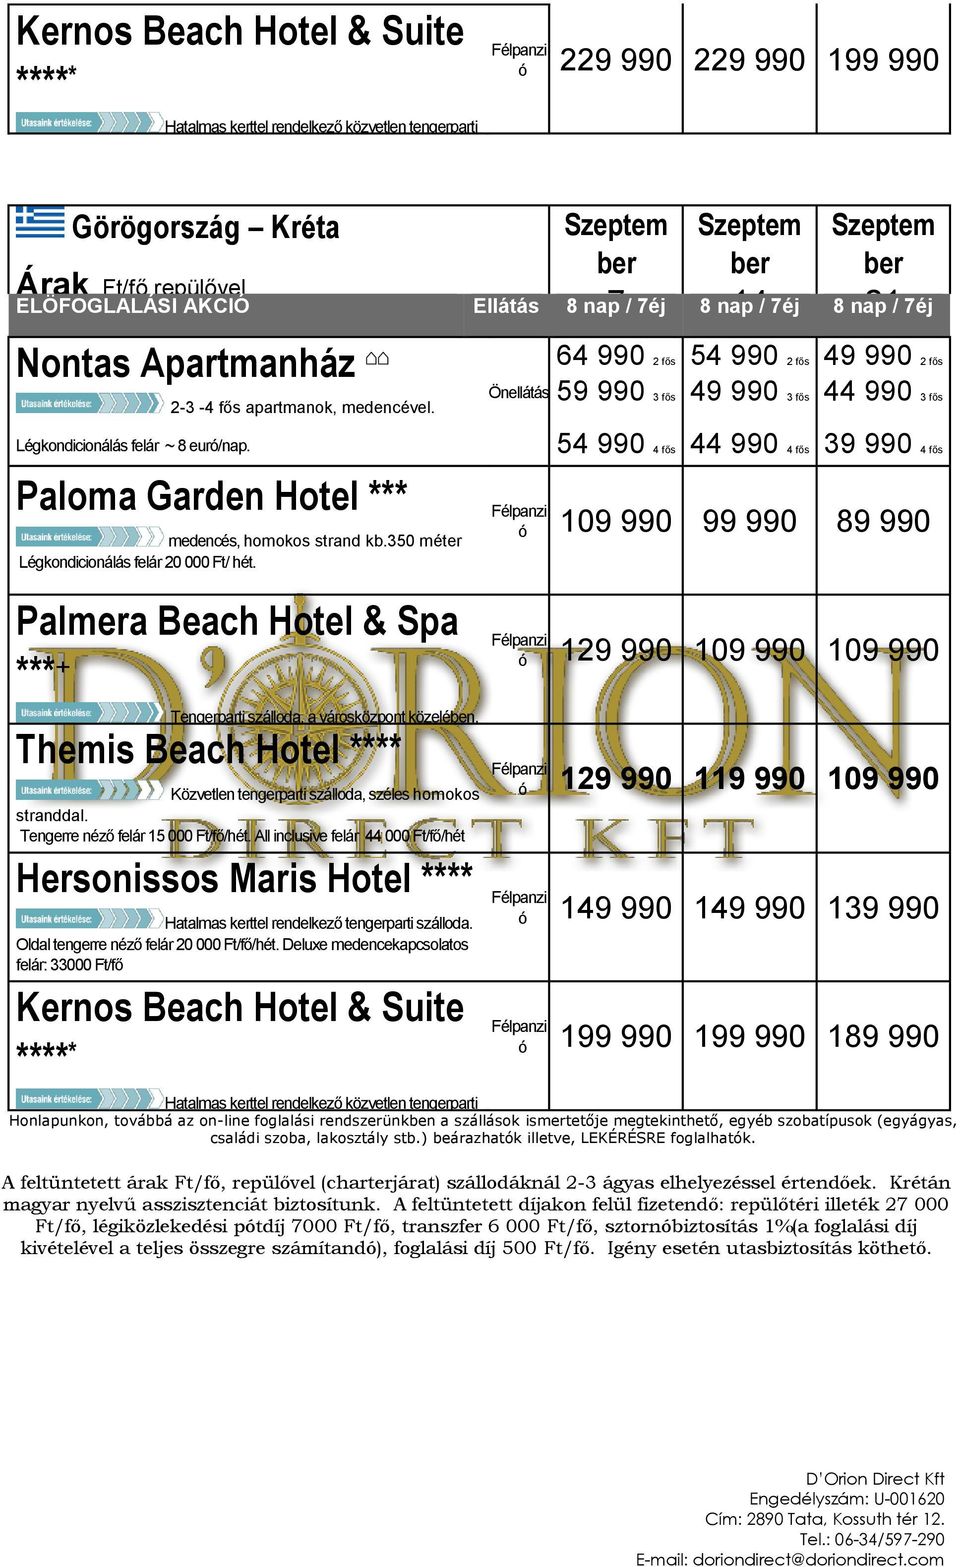 Paloma Garden Hotel *** medencé, homoko trand kb.350 méter Légkondicionálá felár 20 000 Ft/ hét.